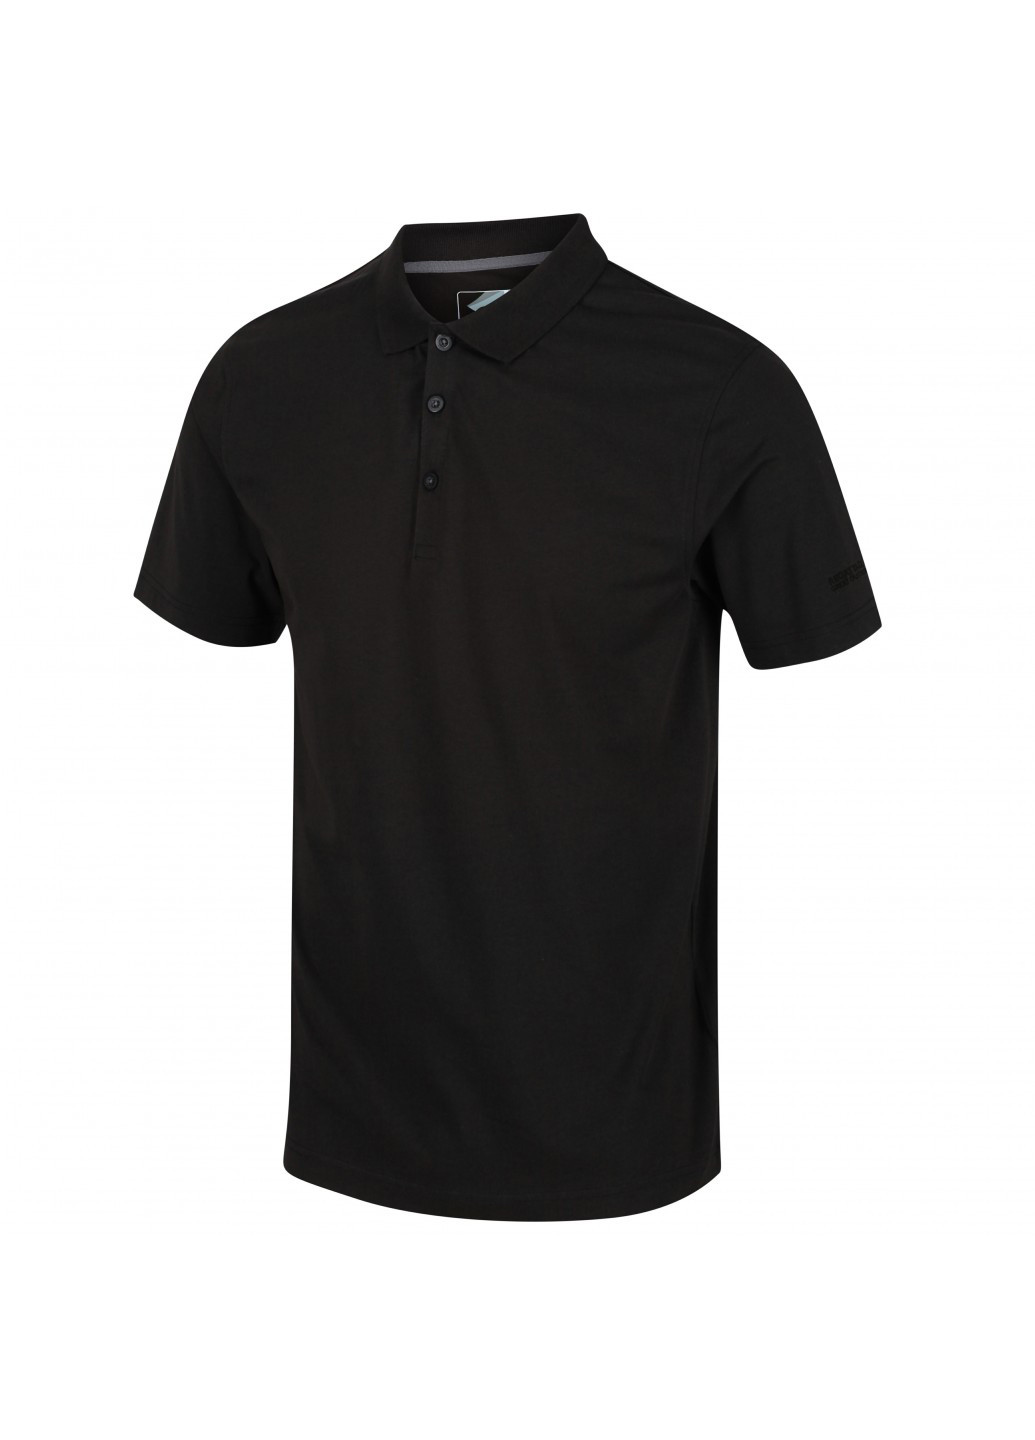 Черная футболка-поло для мужчин Regatta однотонная